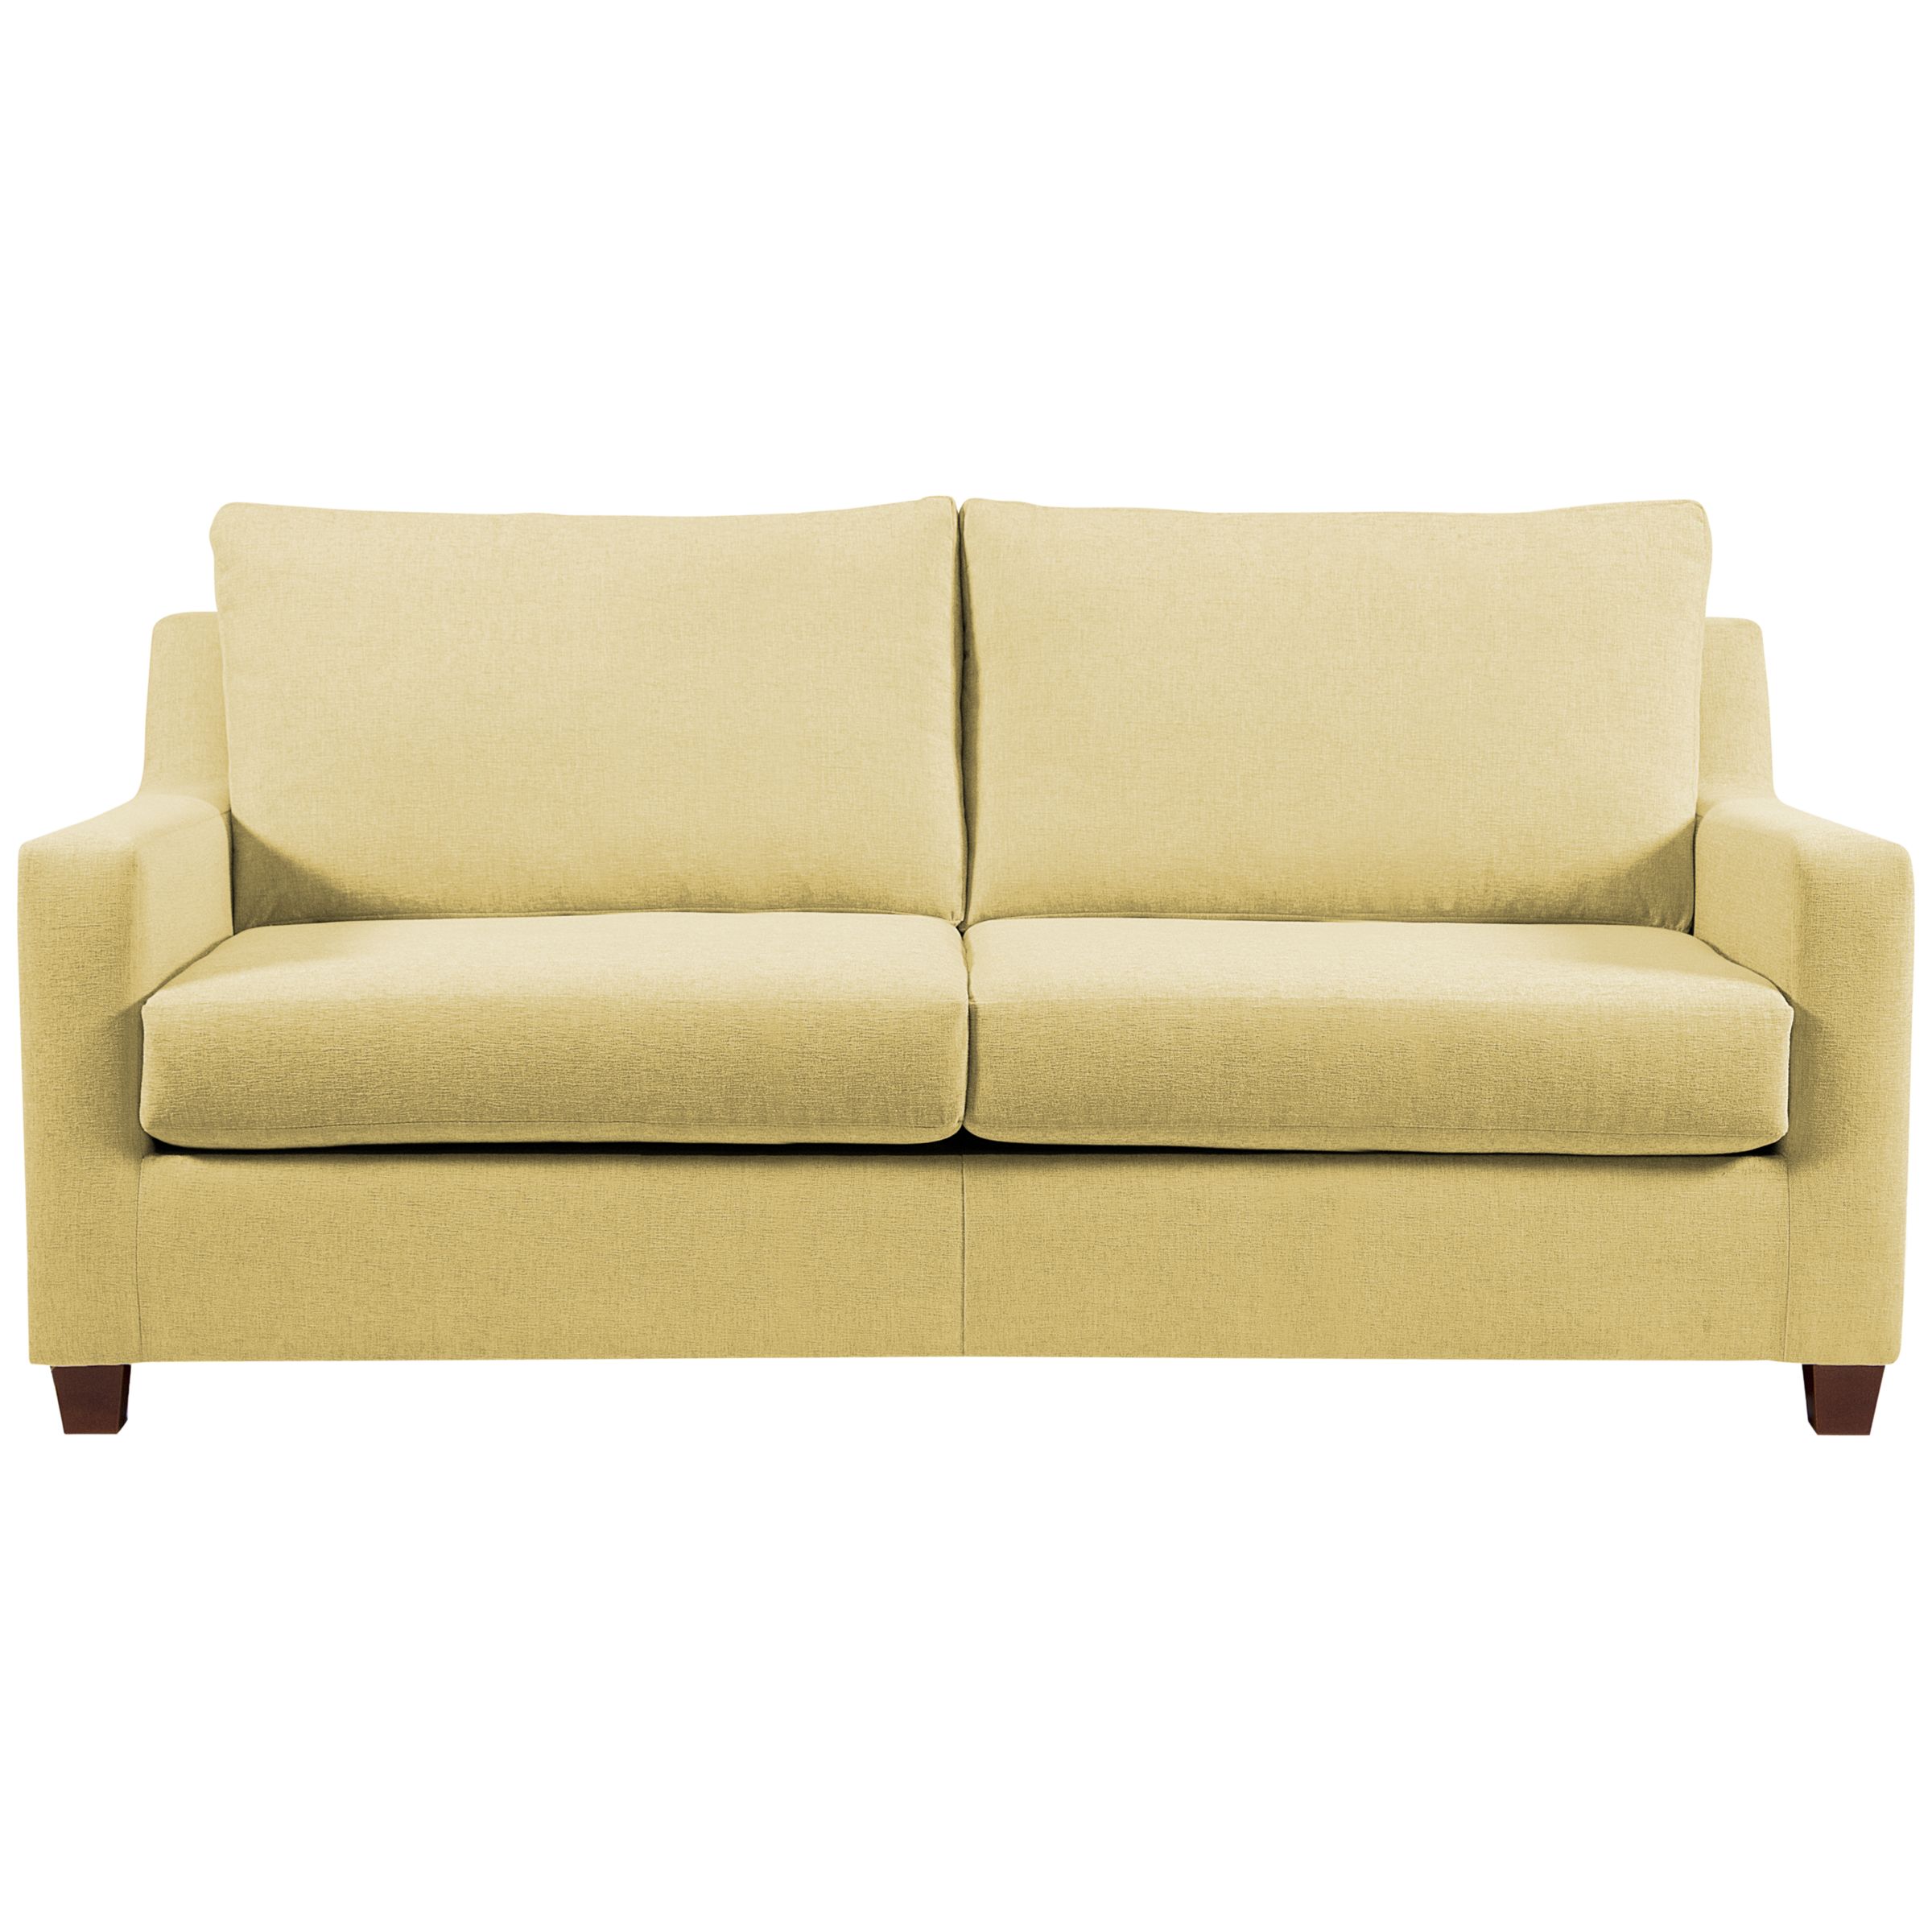 John Lewis Bizet Large Sofa Bed with Open Sprung Mattress, Gold, width 208cm